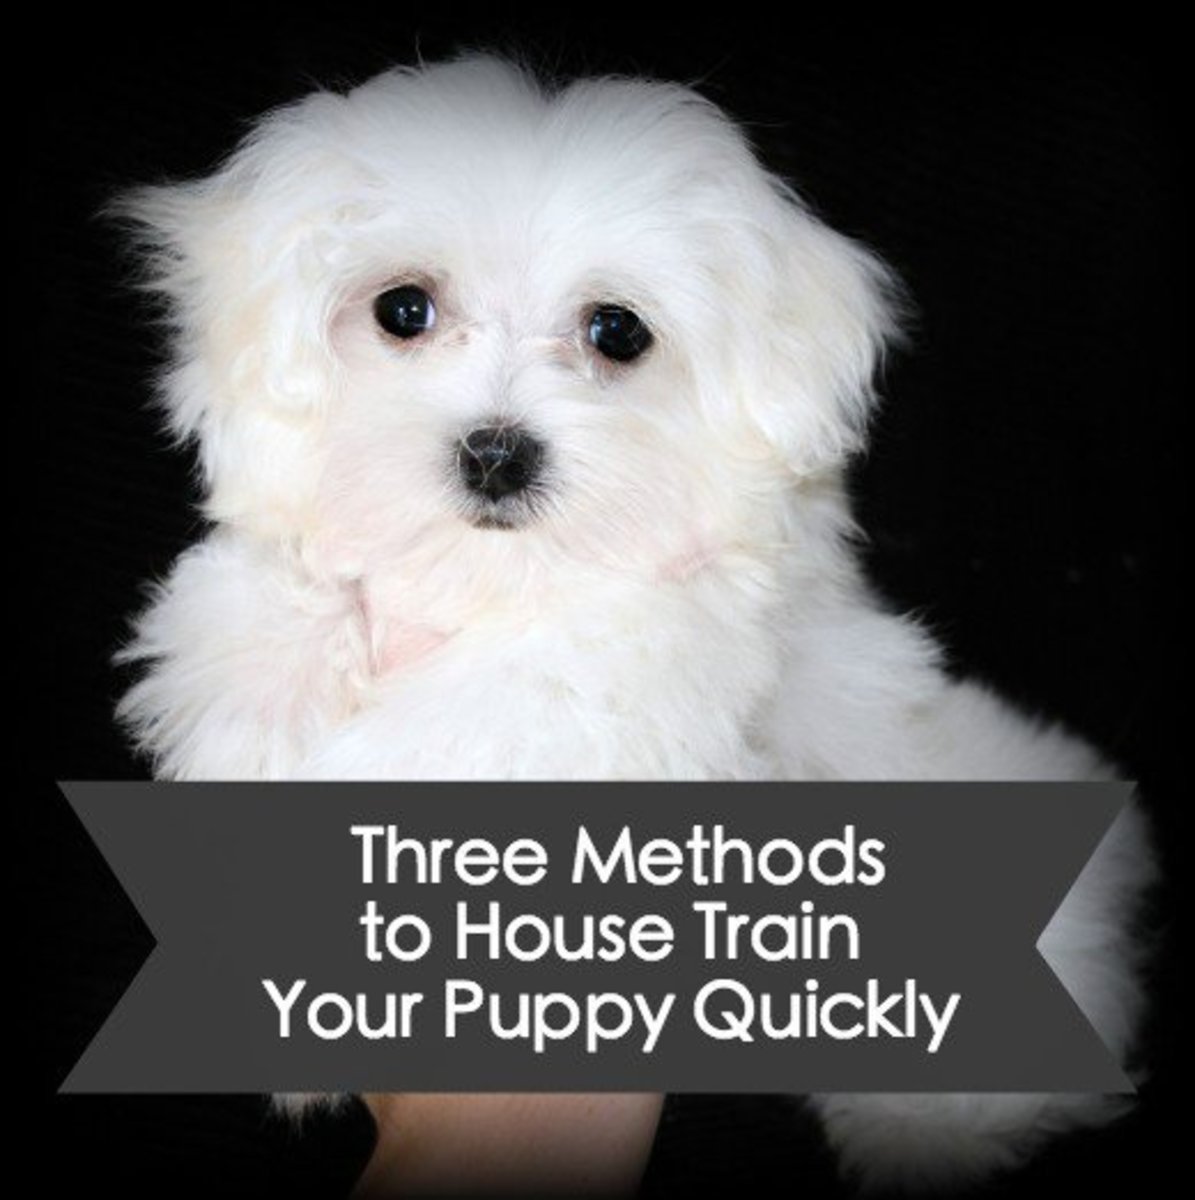 puppy train fast training maltese dogs methods dog three puppies maltipoo vs pet try